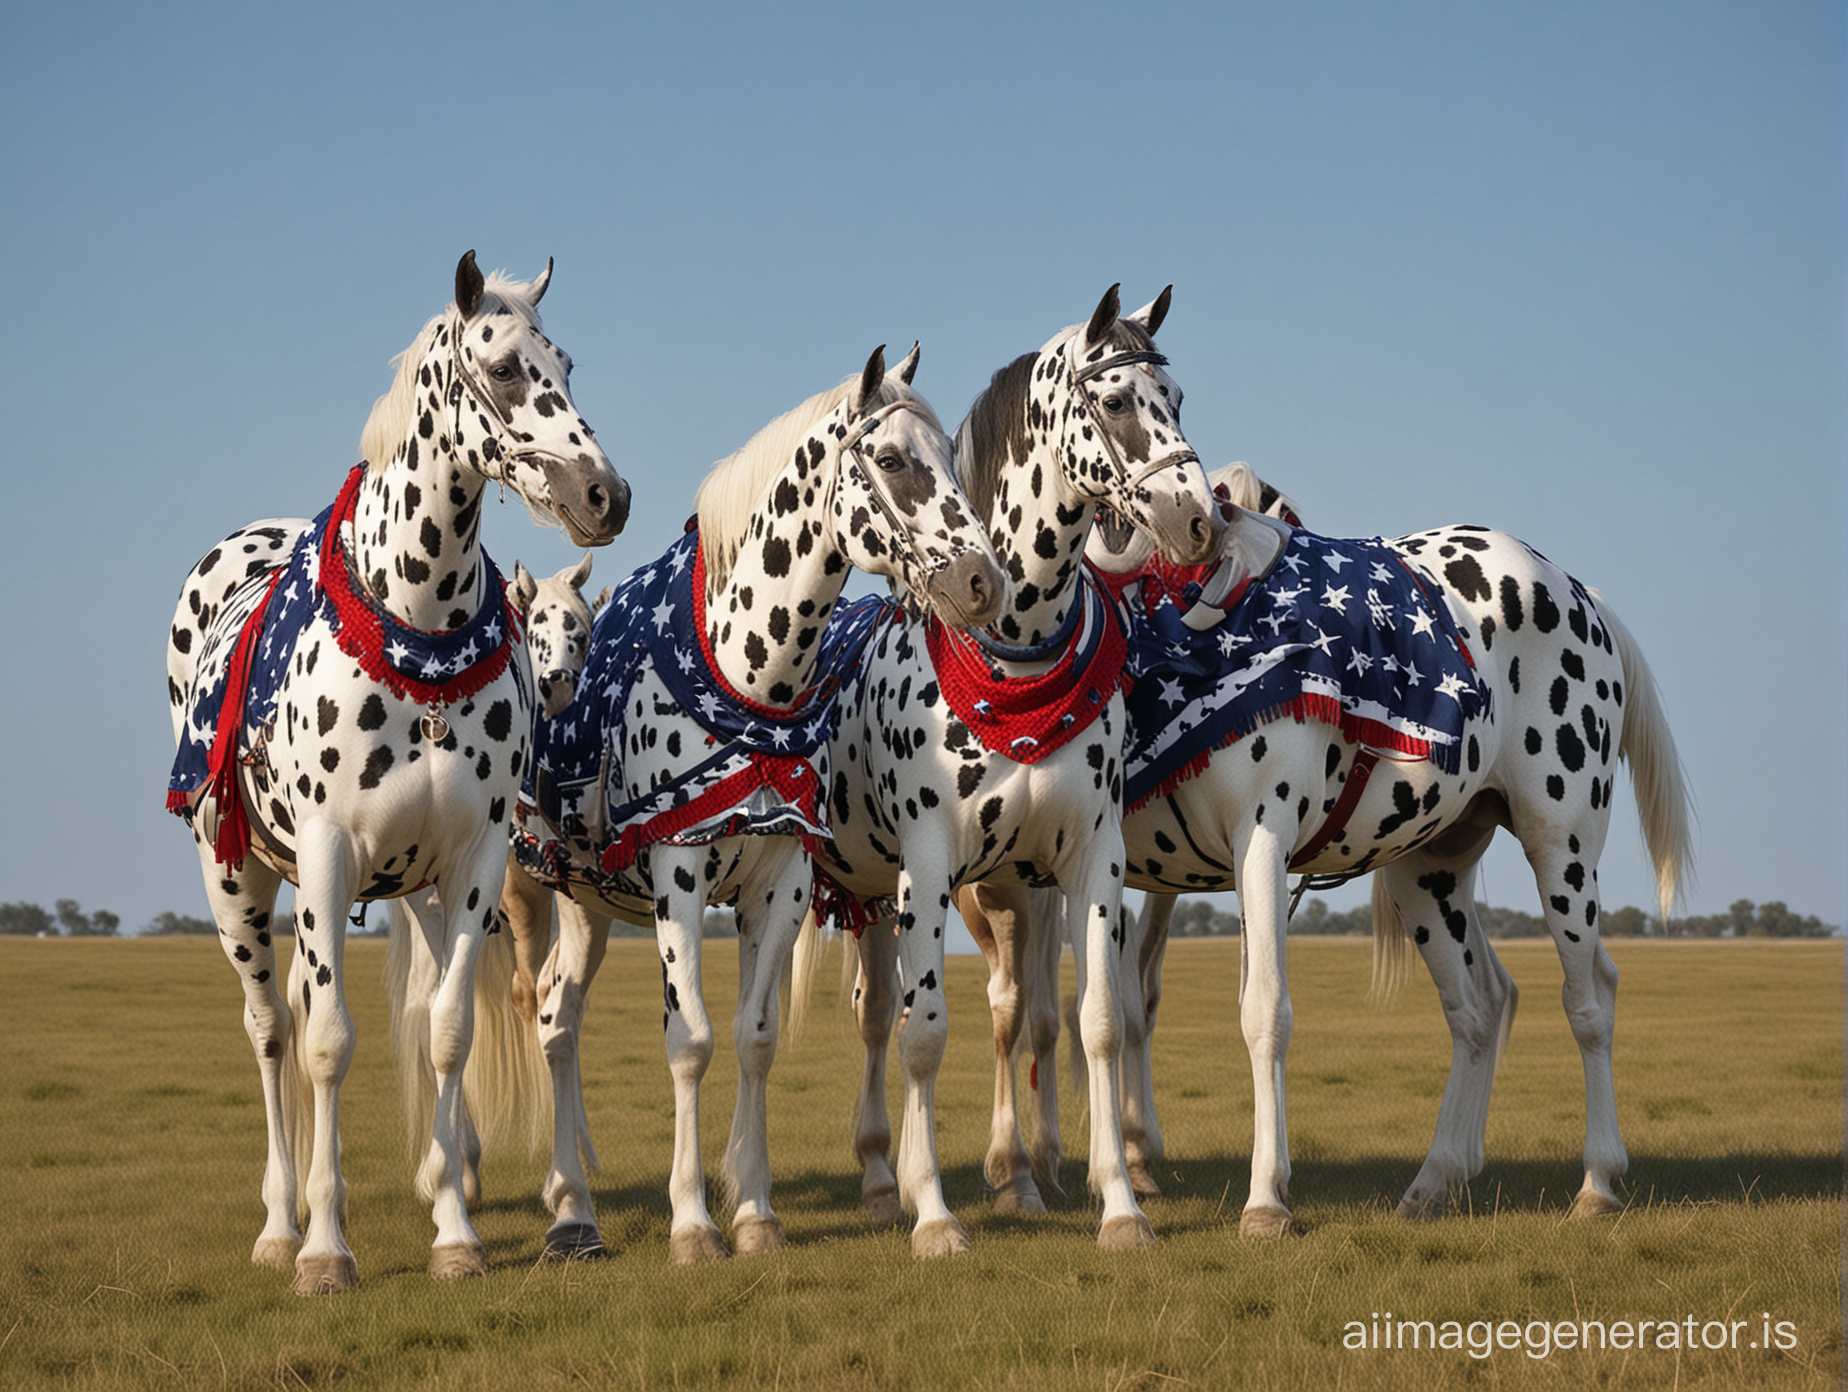 dalmatian knabstrupper horses with Star-Spangled Banner blanket compass  blue sky
